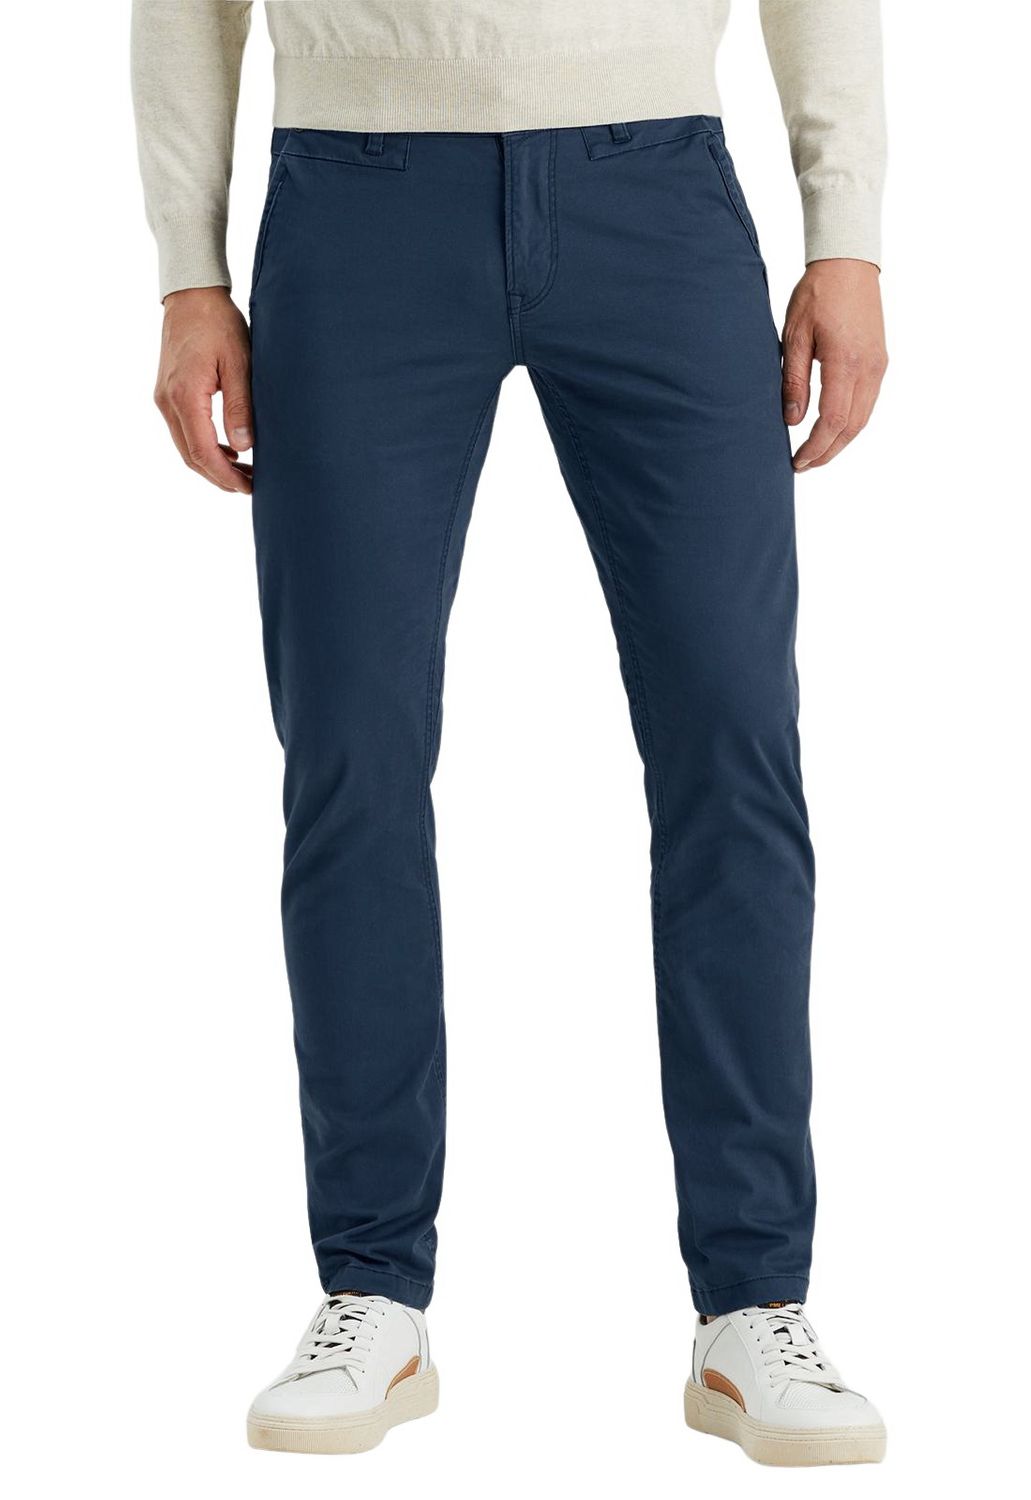 Тканевые брюки PME Legend Stoff/Chino TWIN WASP CHINO regular/straight, синий брюки only paris regular chino синий